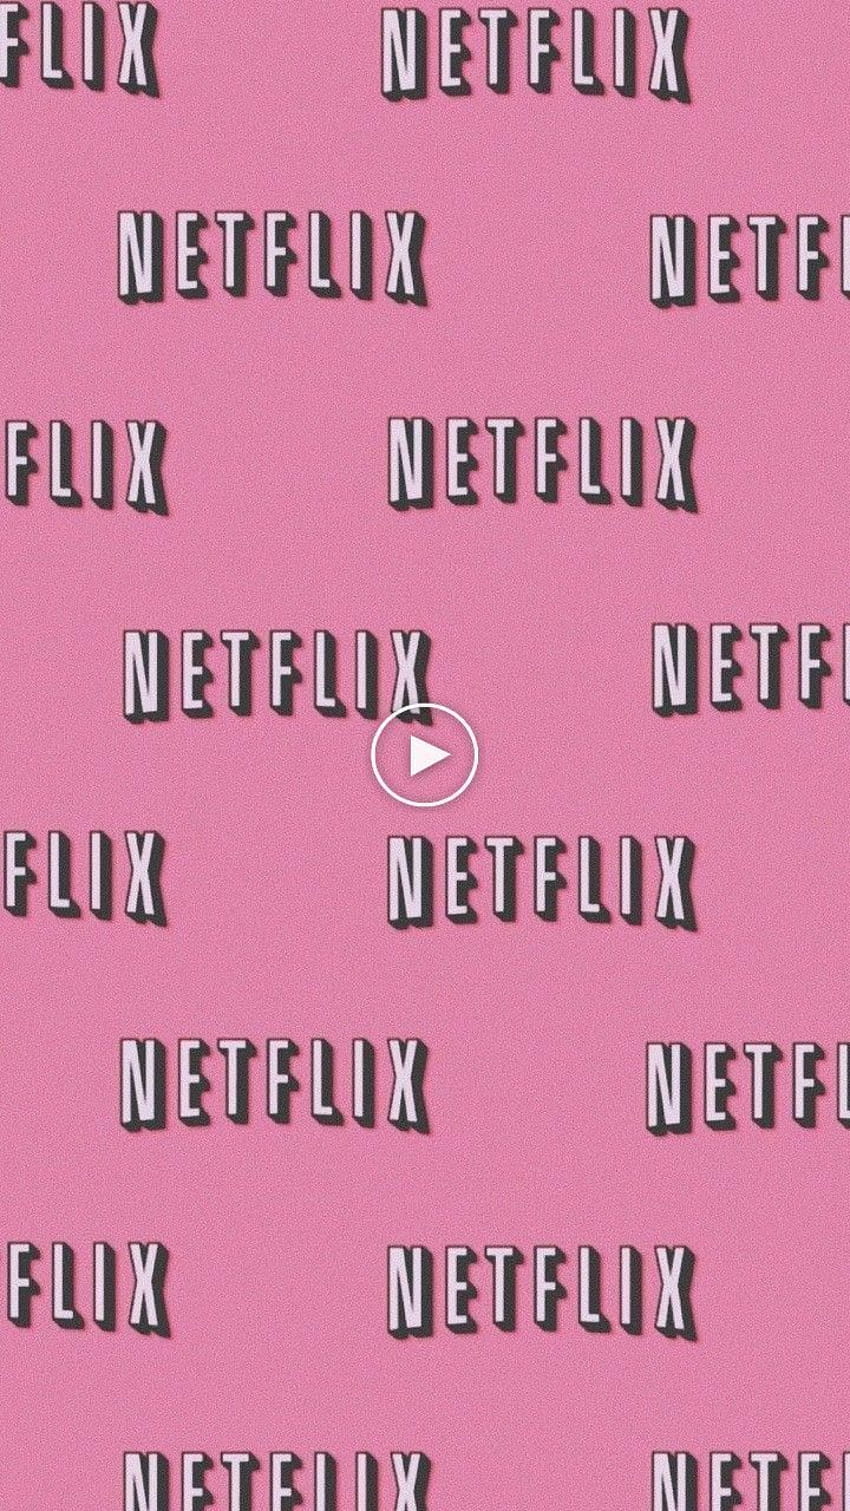 Netflix pink background with the Netflix logo in white - Netflix